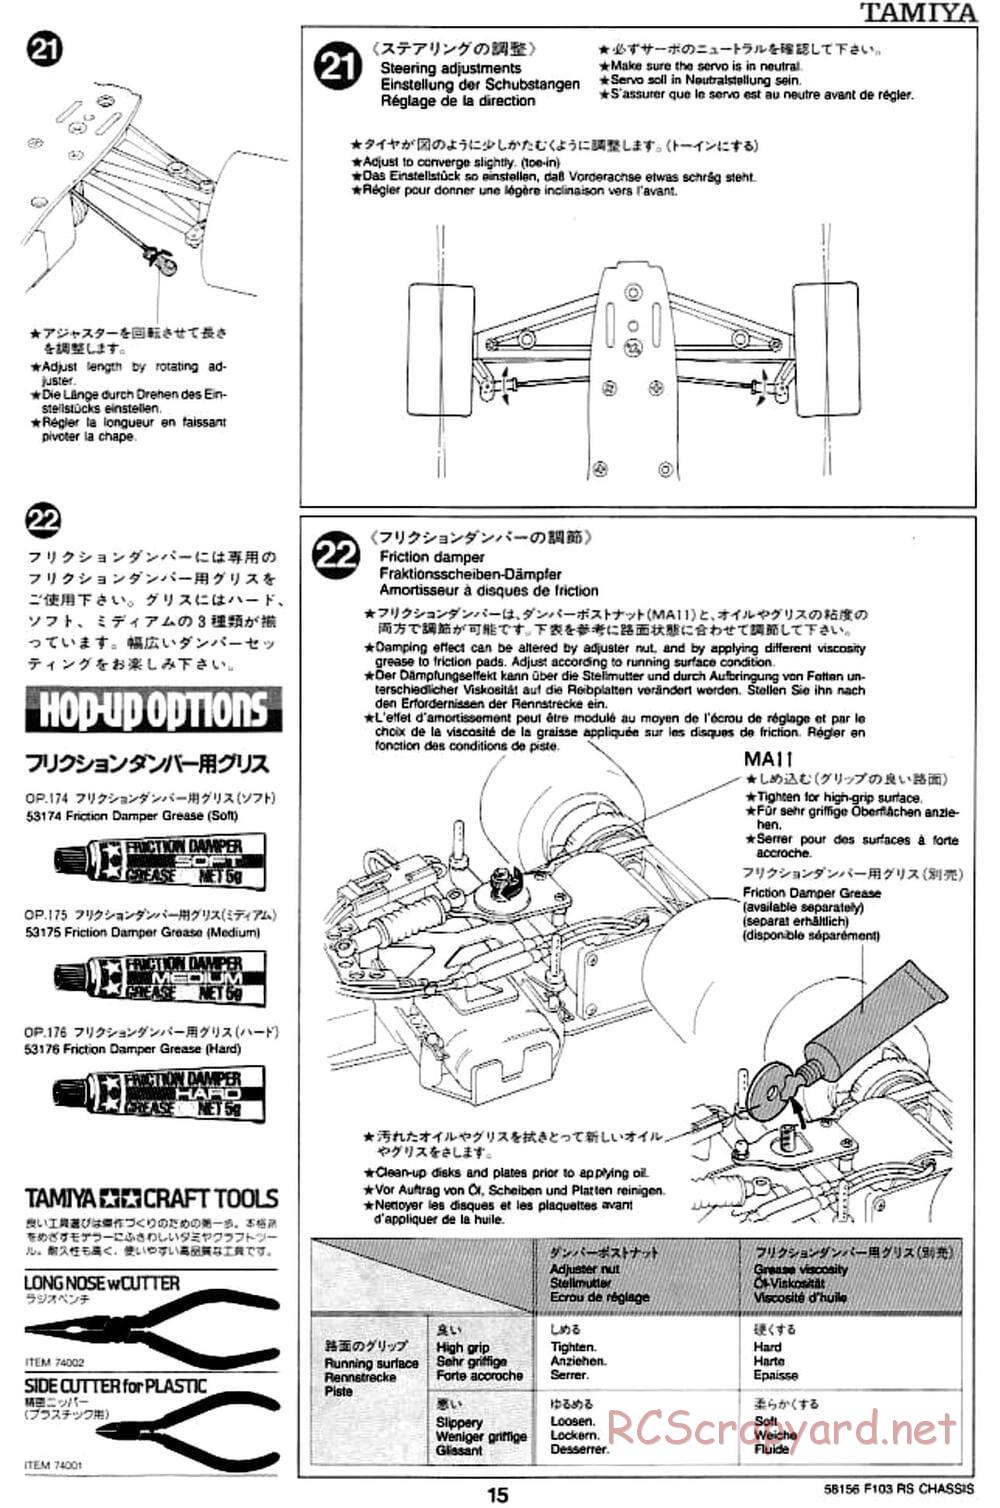 Tamiya - F103RS Chassis - Manual - Page 15